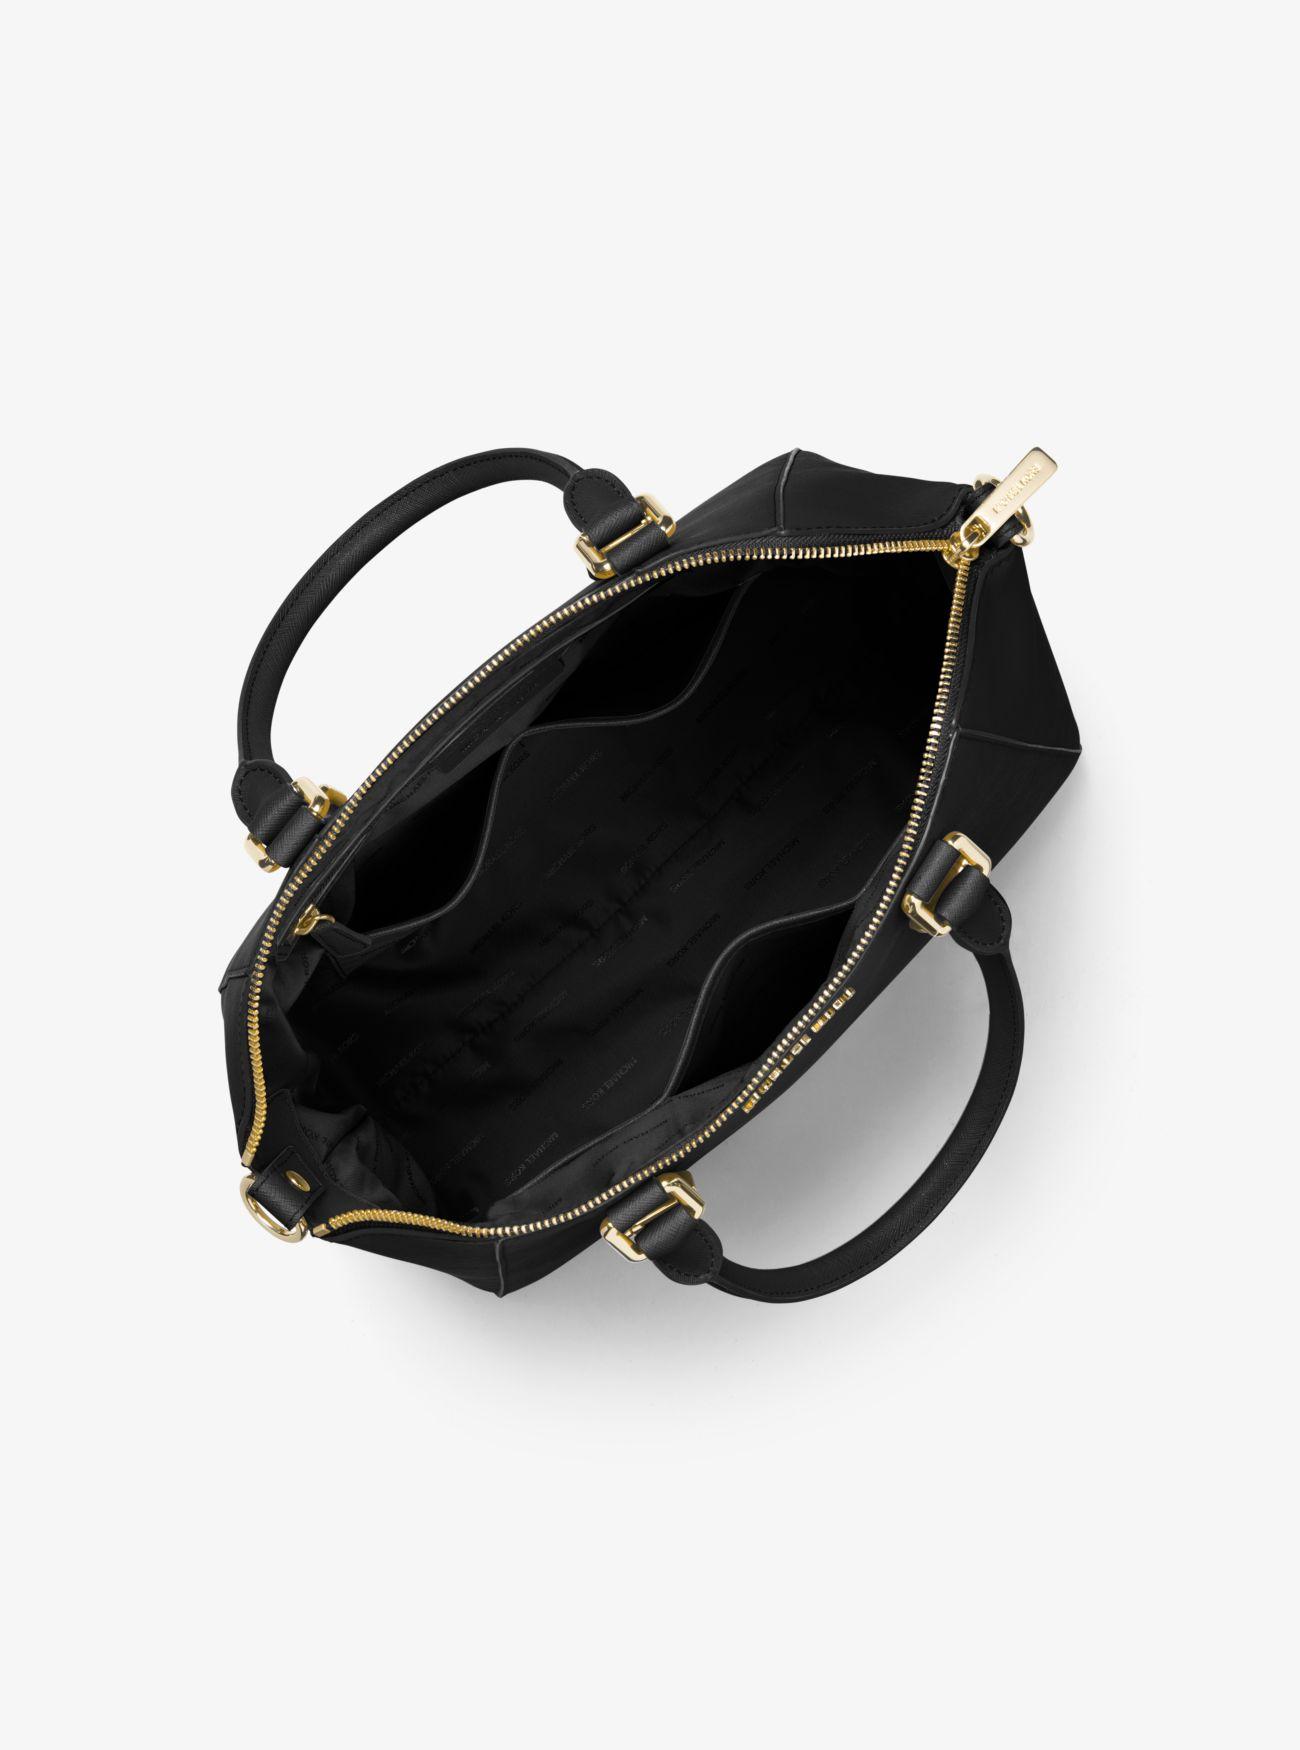 MICHAEL Michael Kors Ciara Large Saffiano Leather Satchel in Black | Lyst